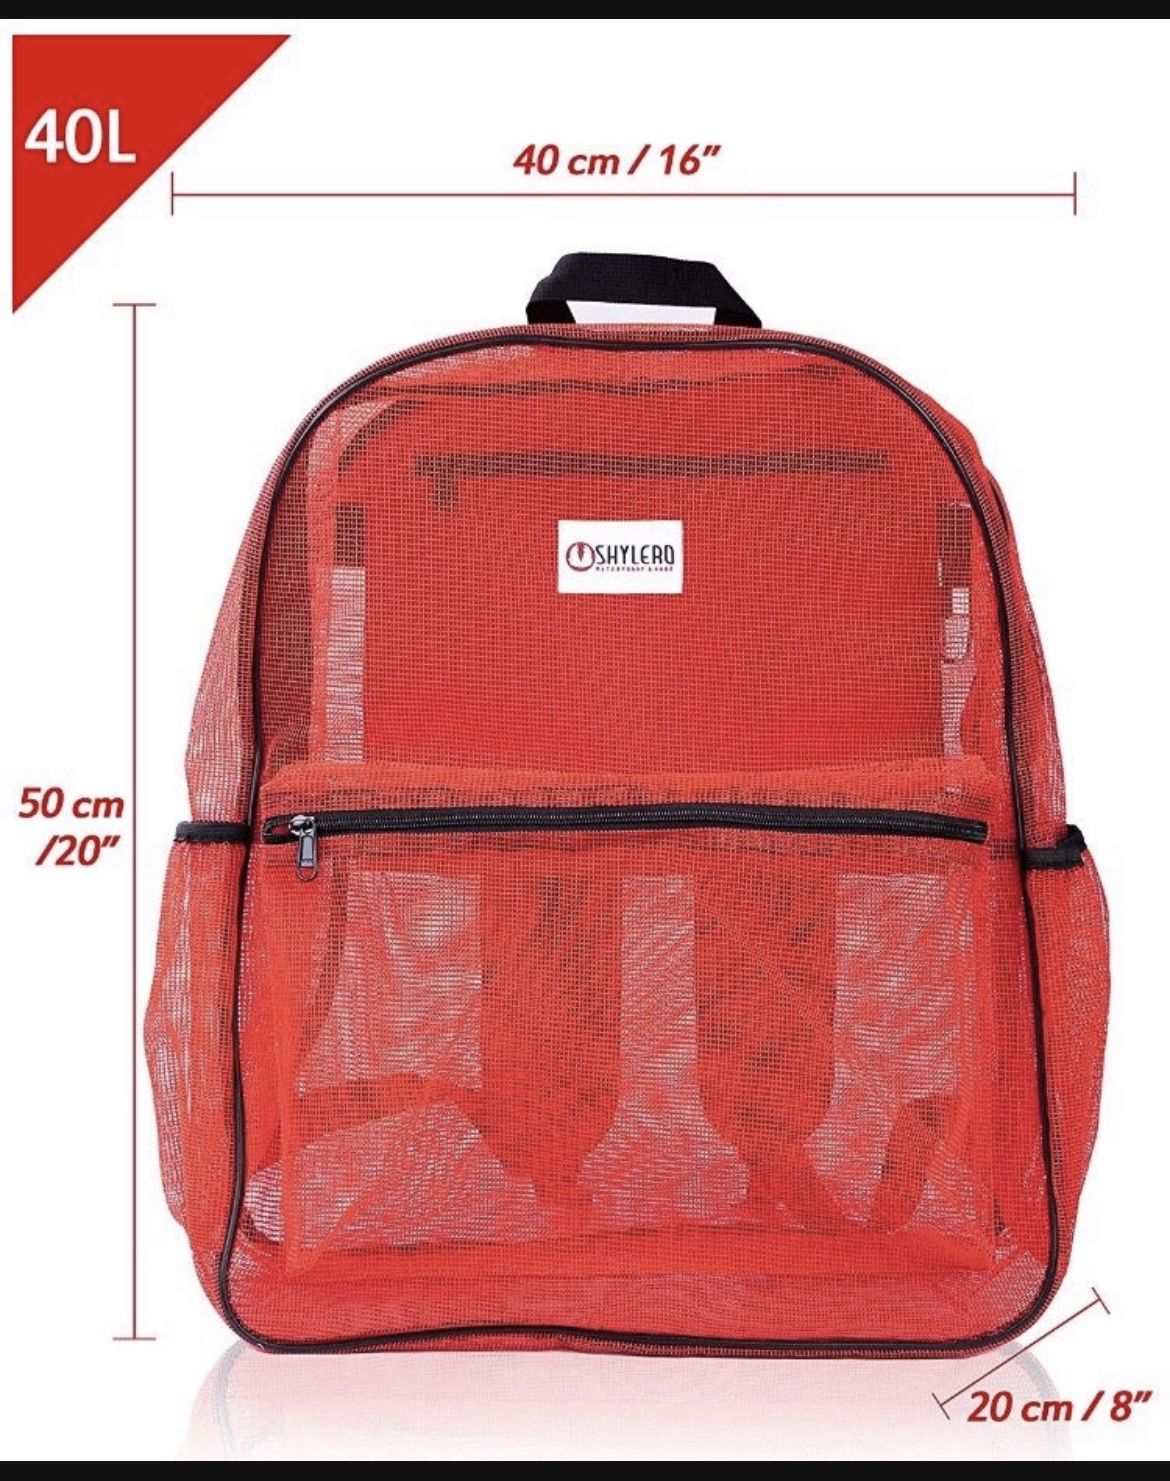 SHYLERO Mesh Backpack XL (40L). 100% Clear Backpack with Key Holder, Bottle Opener, Inner Zippered Pocket. H20 xW16 xD8